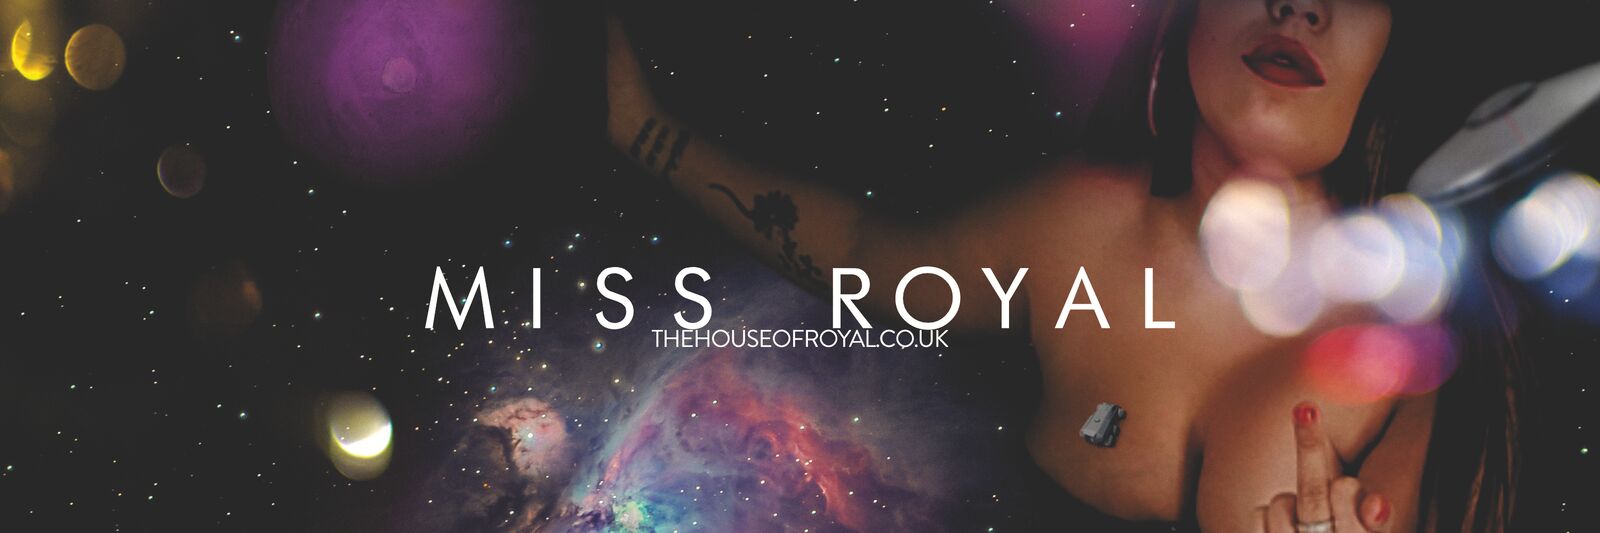 See Miss Royal profile